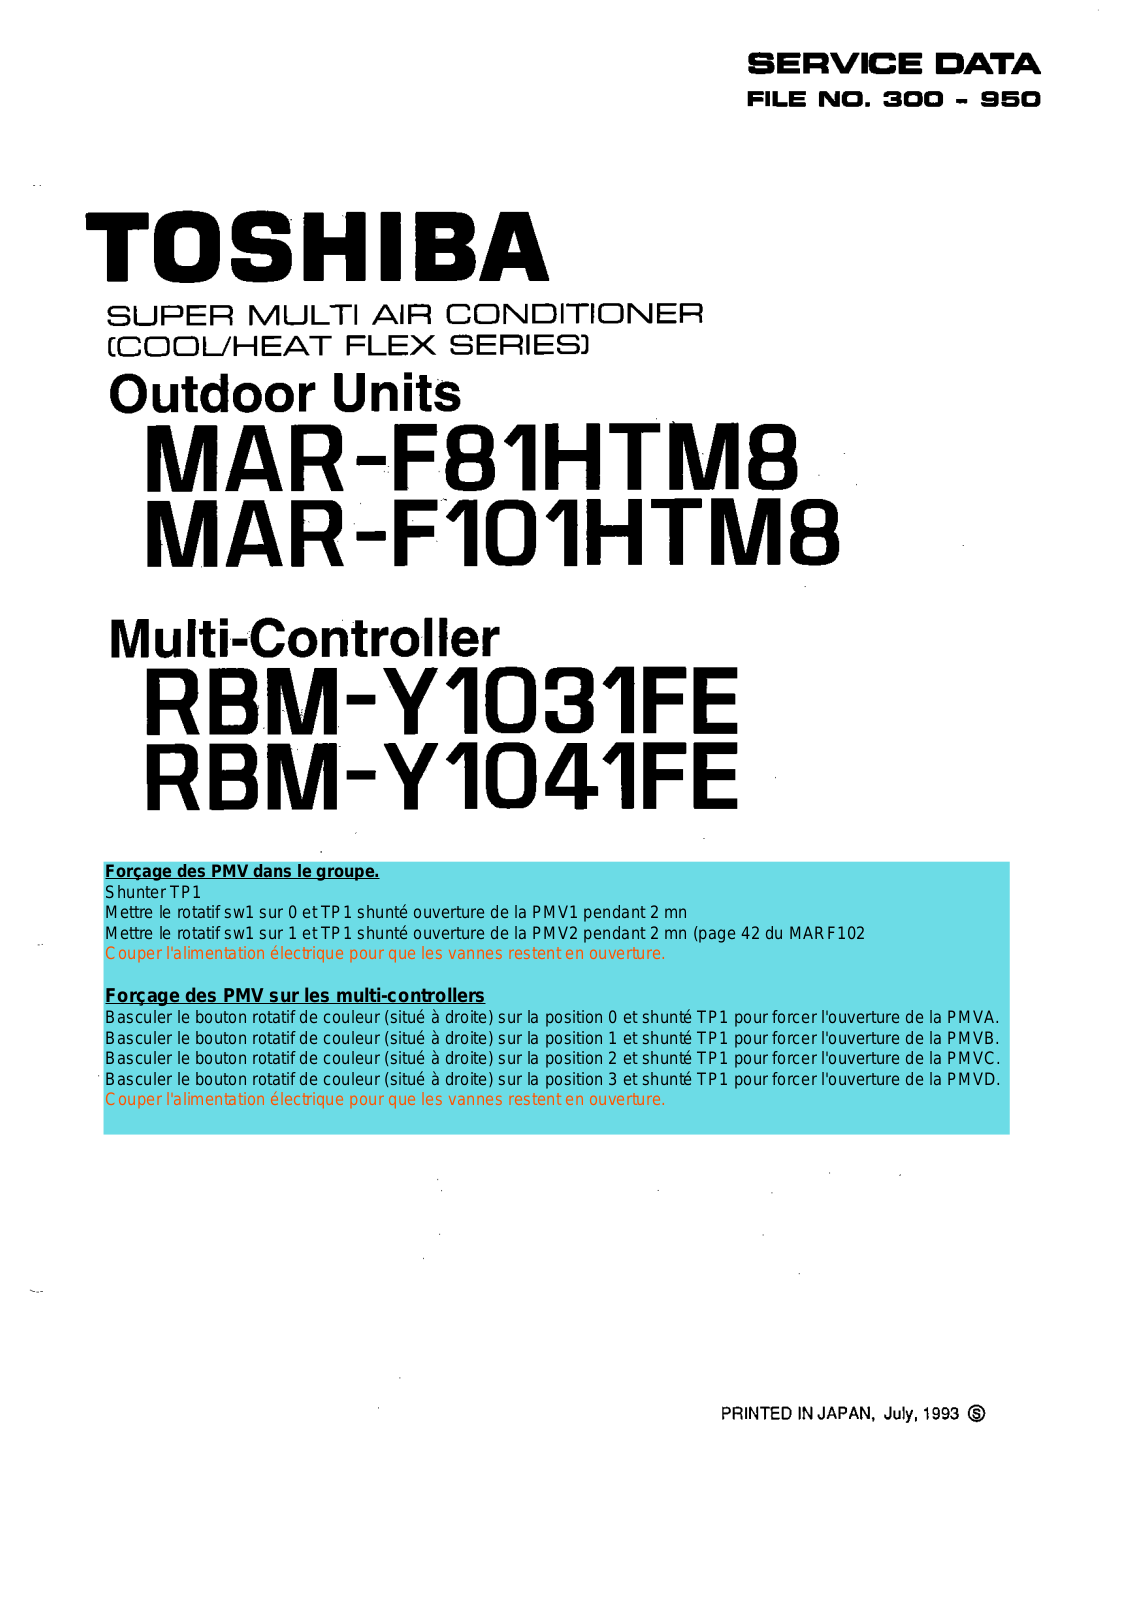 Toshiba MAR-F101HTM8-PE, MAR-F81HTM8-PE SERVICE MANUAL